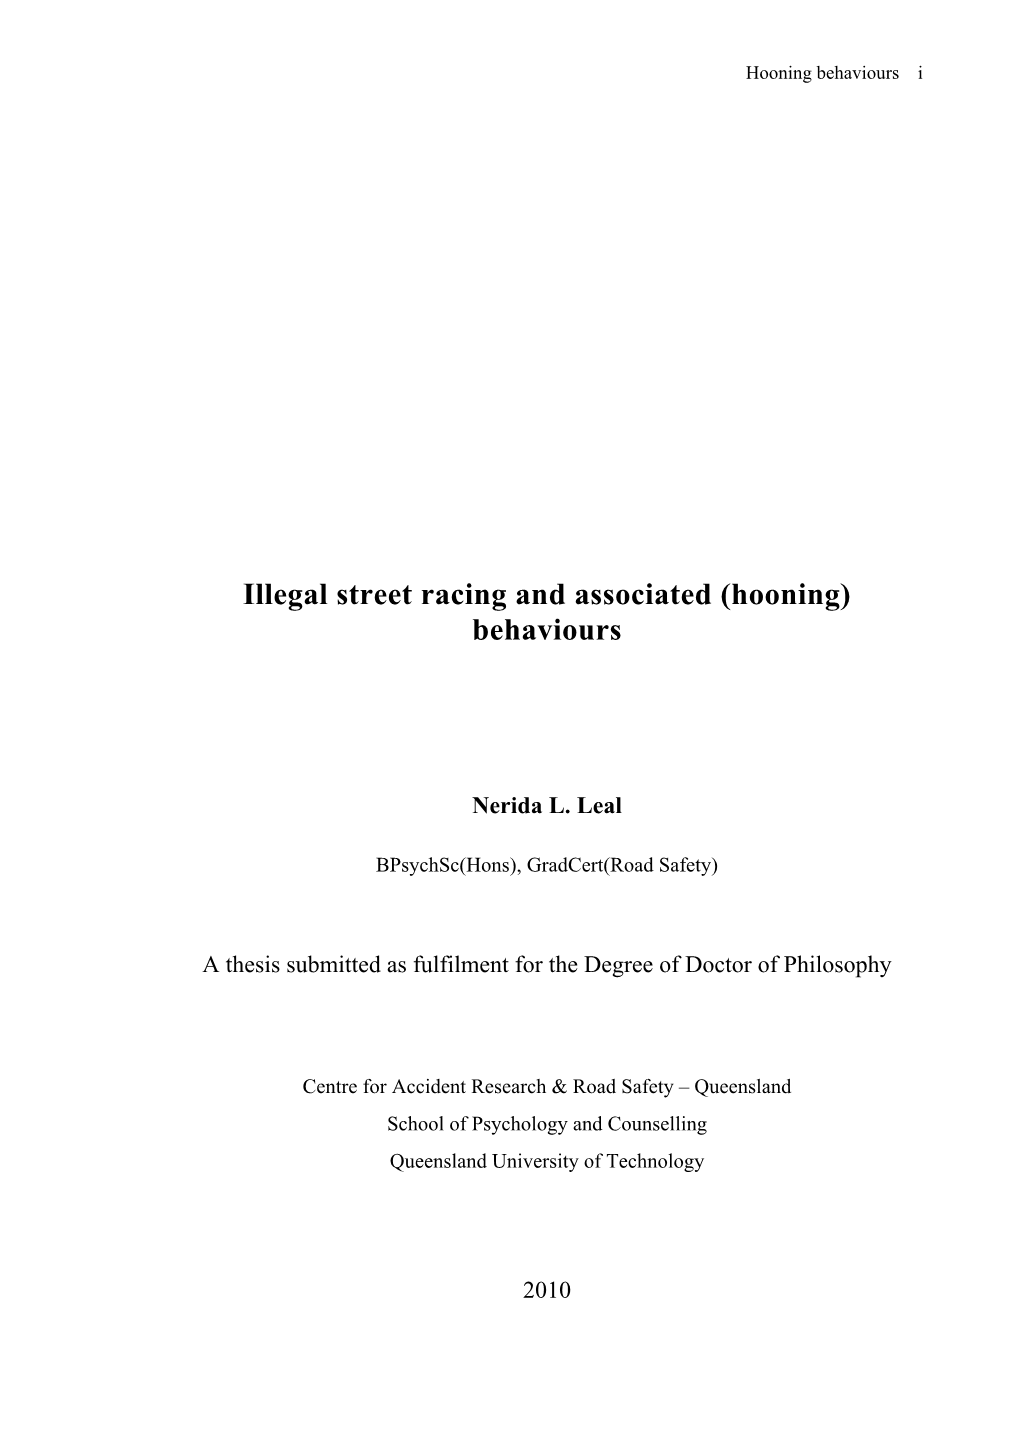 Illegal Street Racing and Associated (Hooning) Behaviours